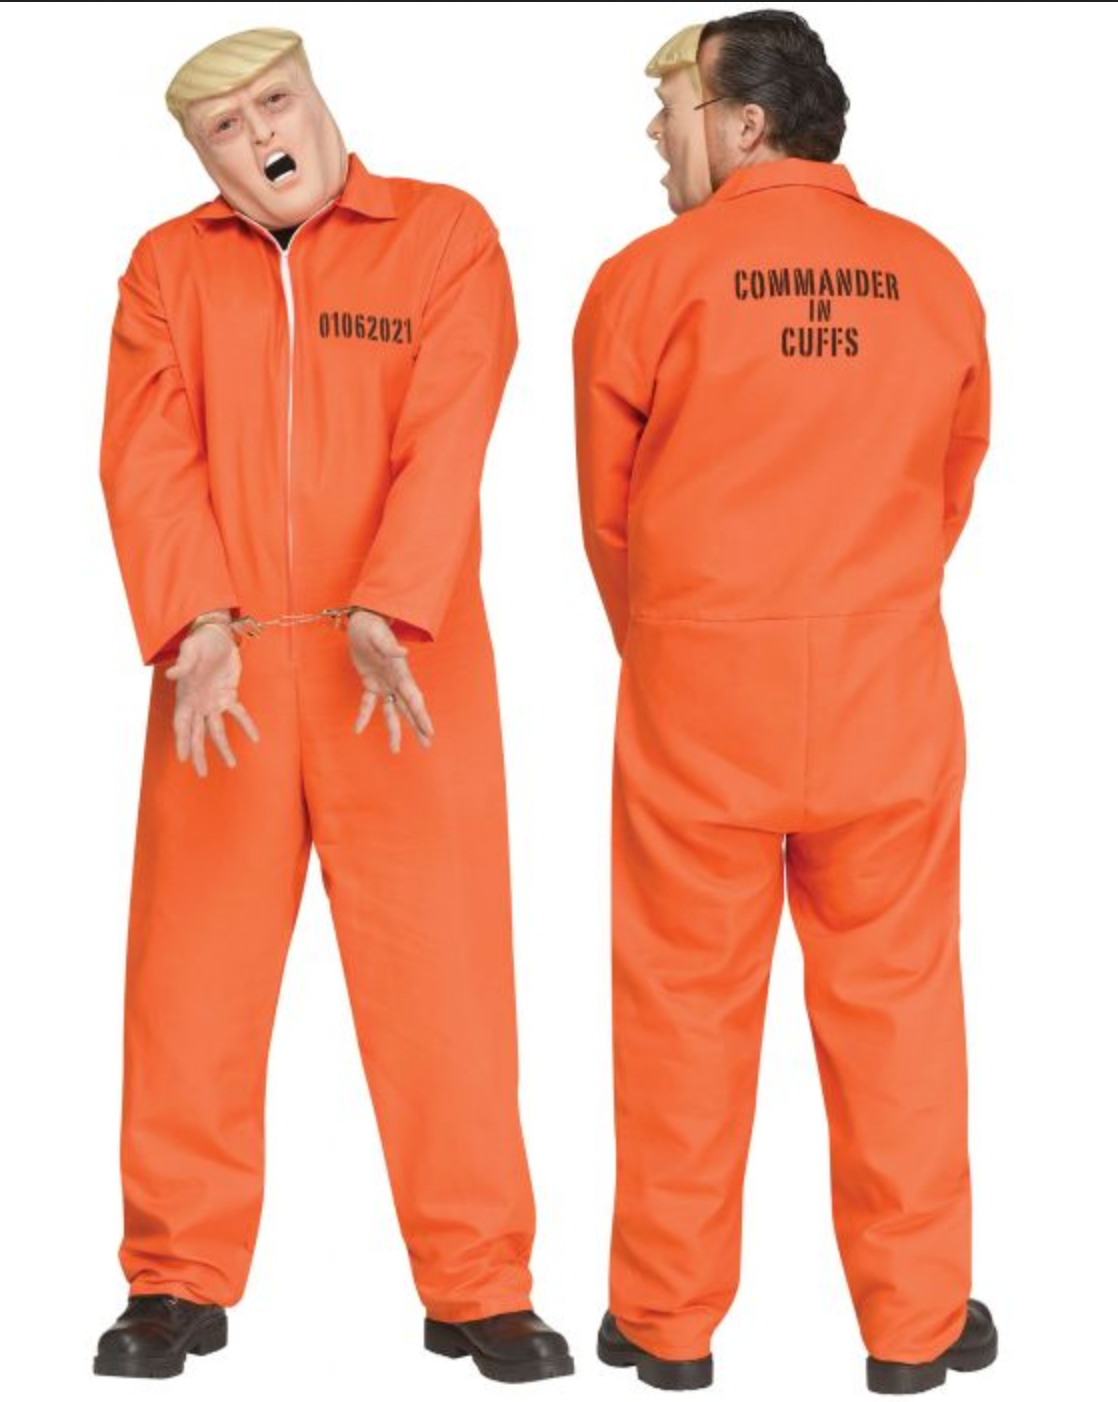 Commander in Cuffs Orange Prison Suit Adult Costume & Mask